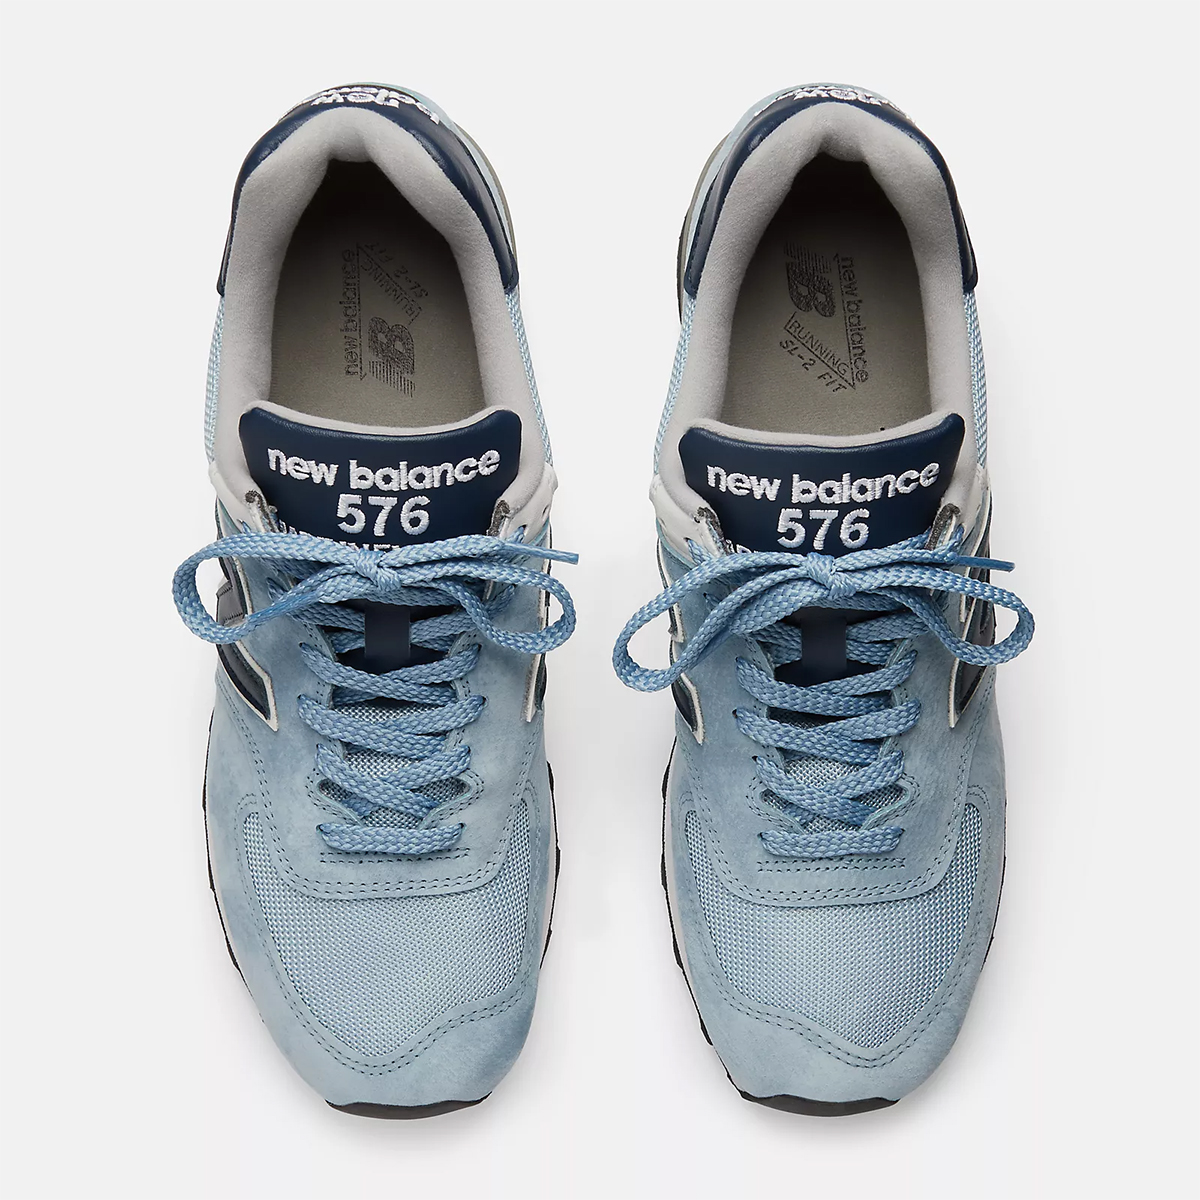 New Balance 1400 V6 Series Marathon Running Shoes Sneakers W1400SH6 Made In Uk Blue Fog Celestial Blue Navy Blazer Ou576nlb 5